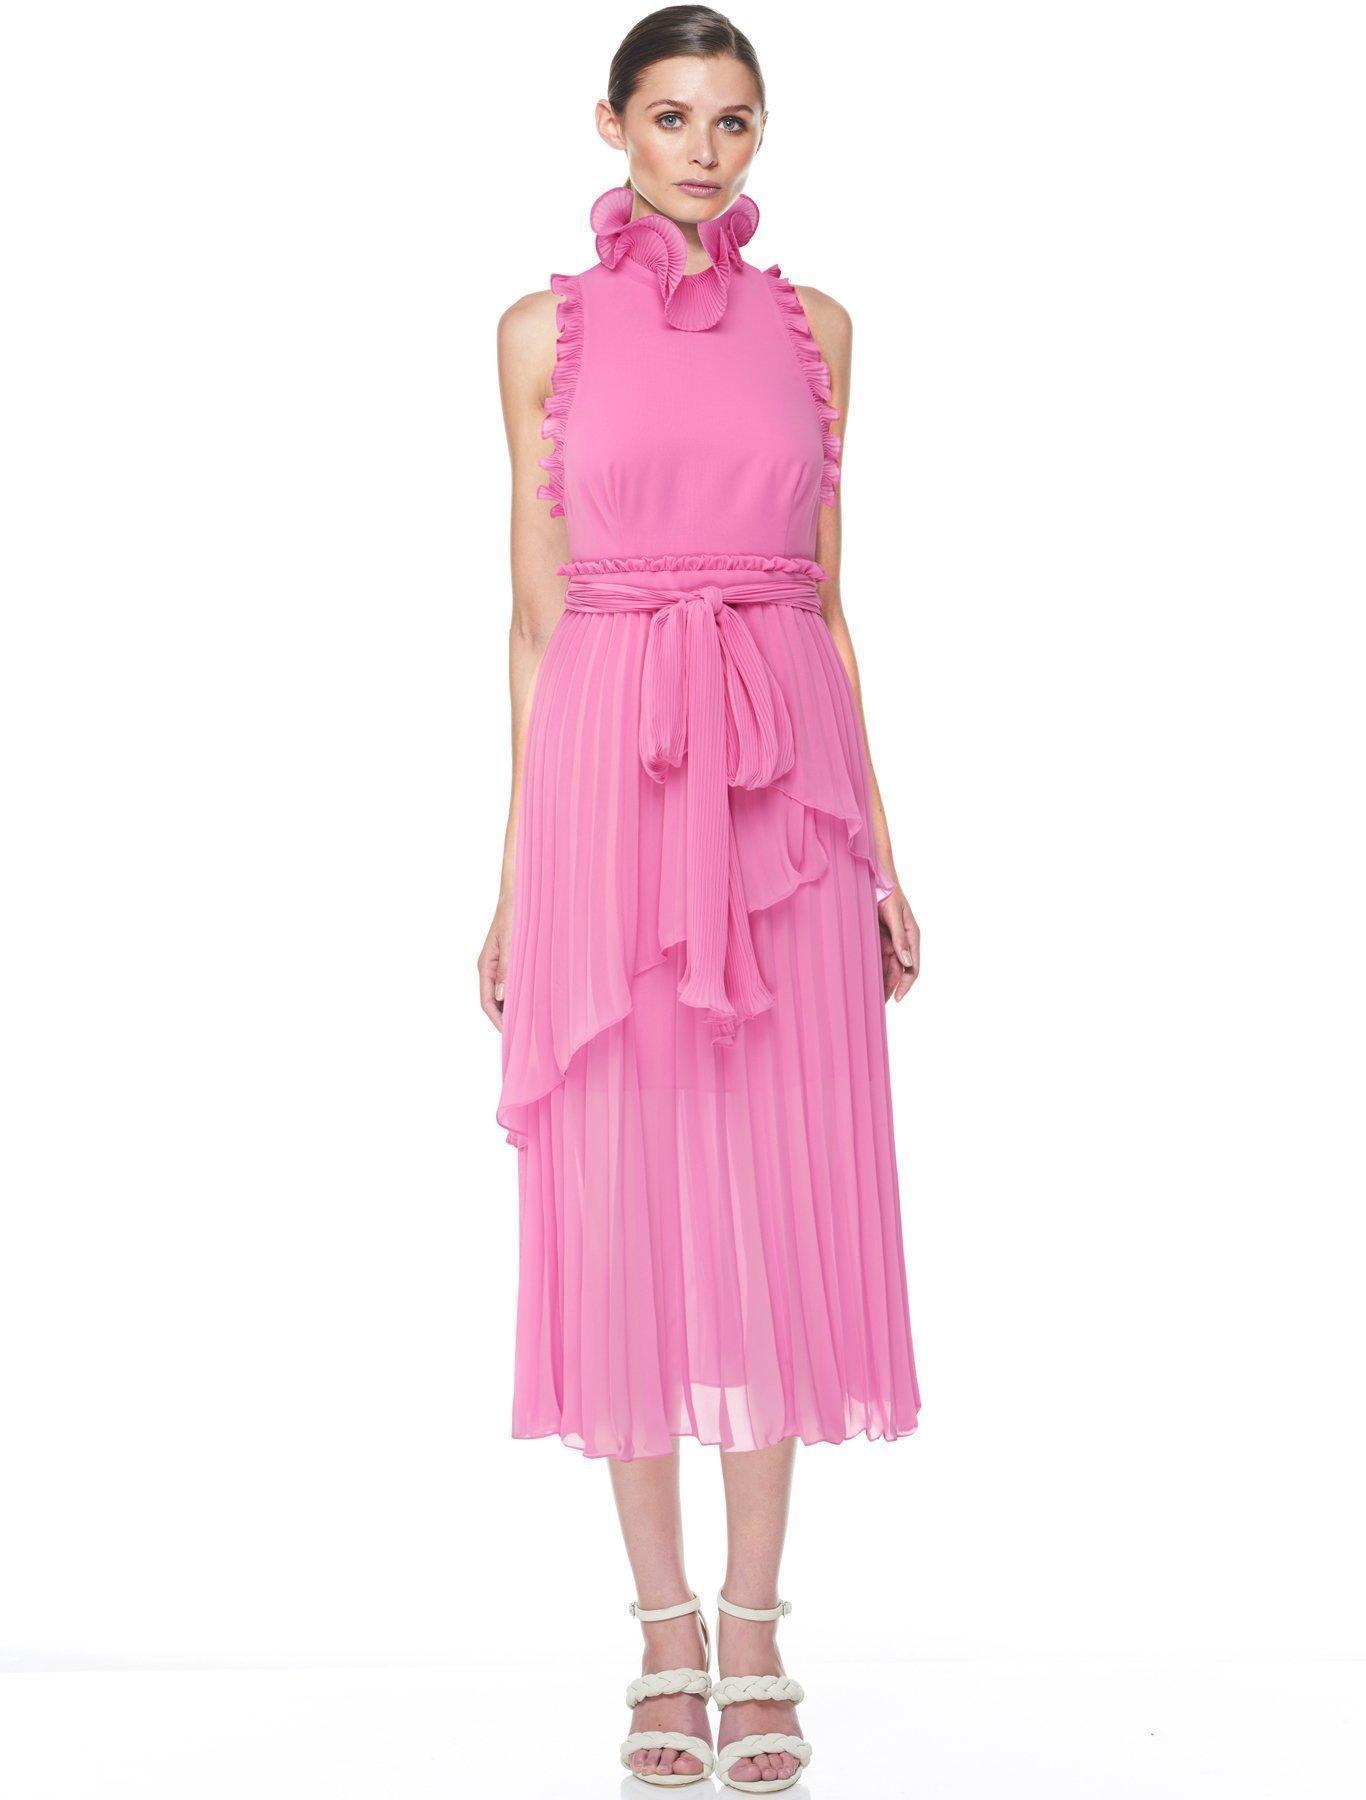 Talulah The Jodi Dress - Pink Size 10